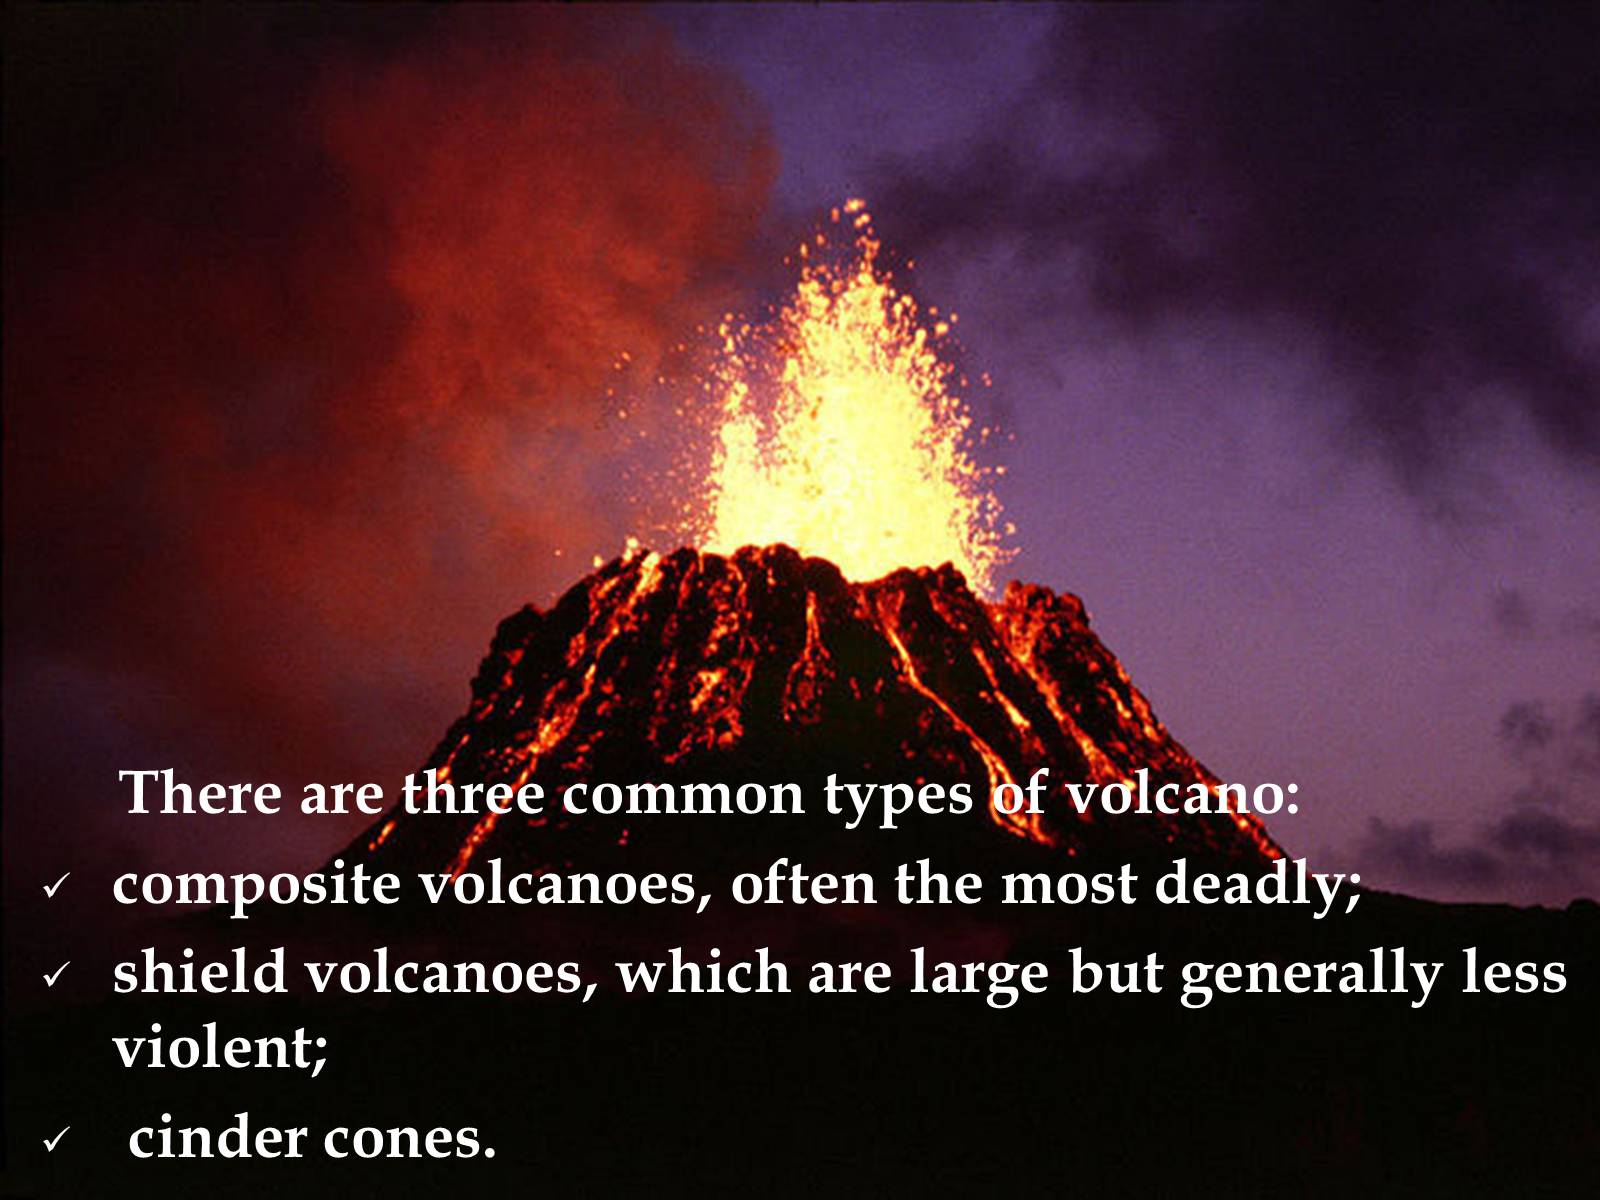 Презентація на тему «Volcanic Eruptions and Hazards» (варіант 2) - Слайд #4